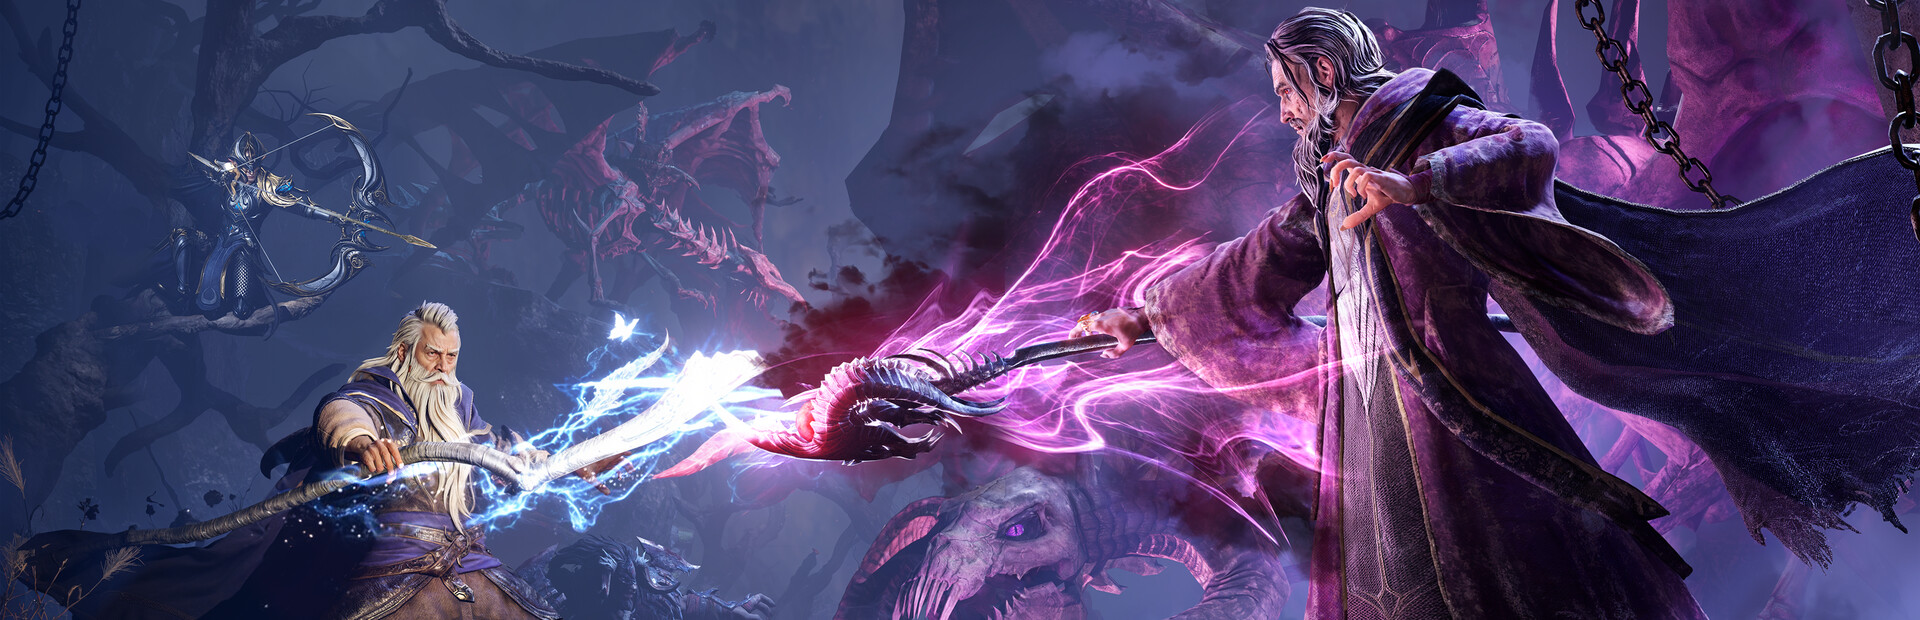 Dragonheir: Silent Gods cover image